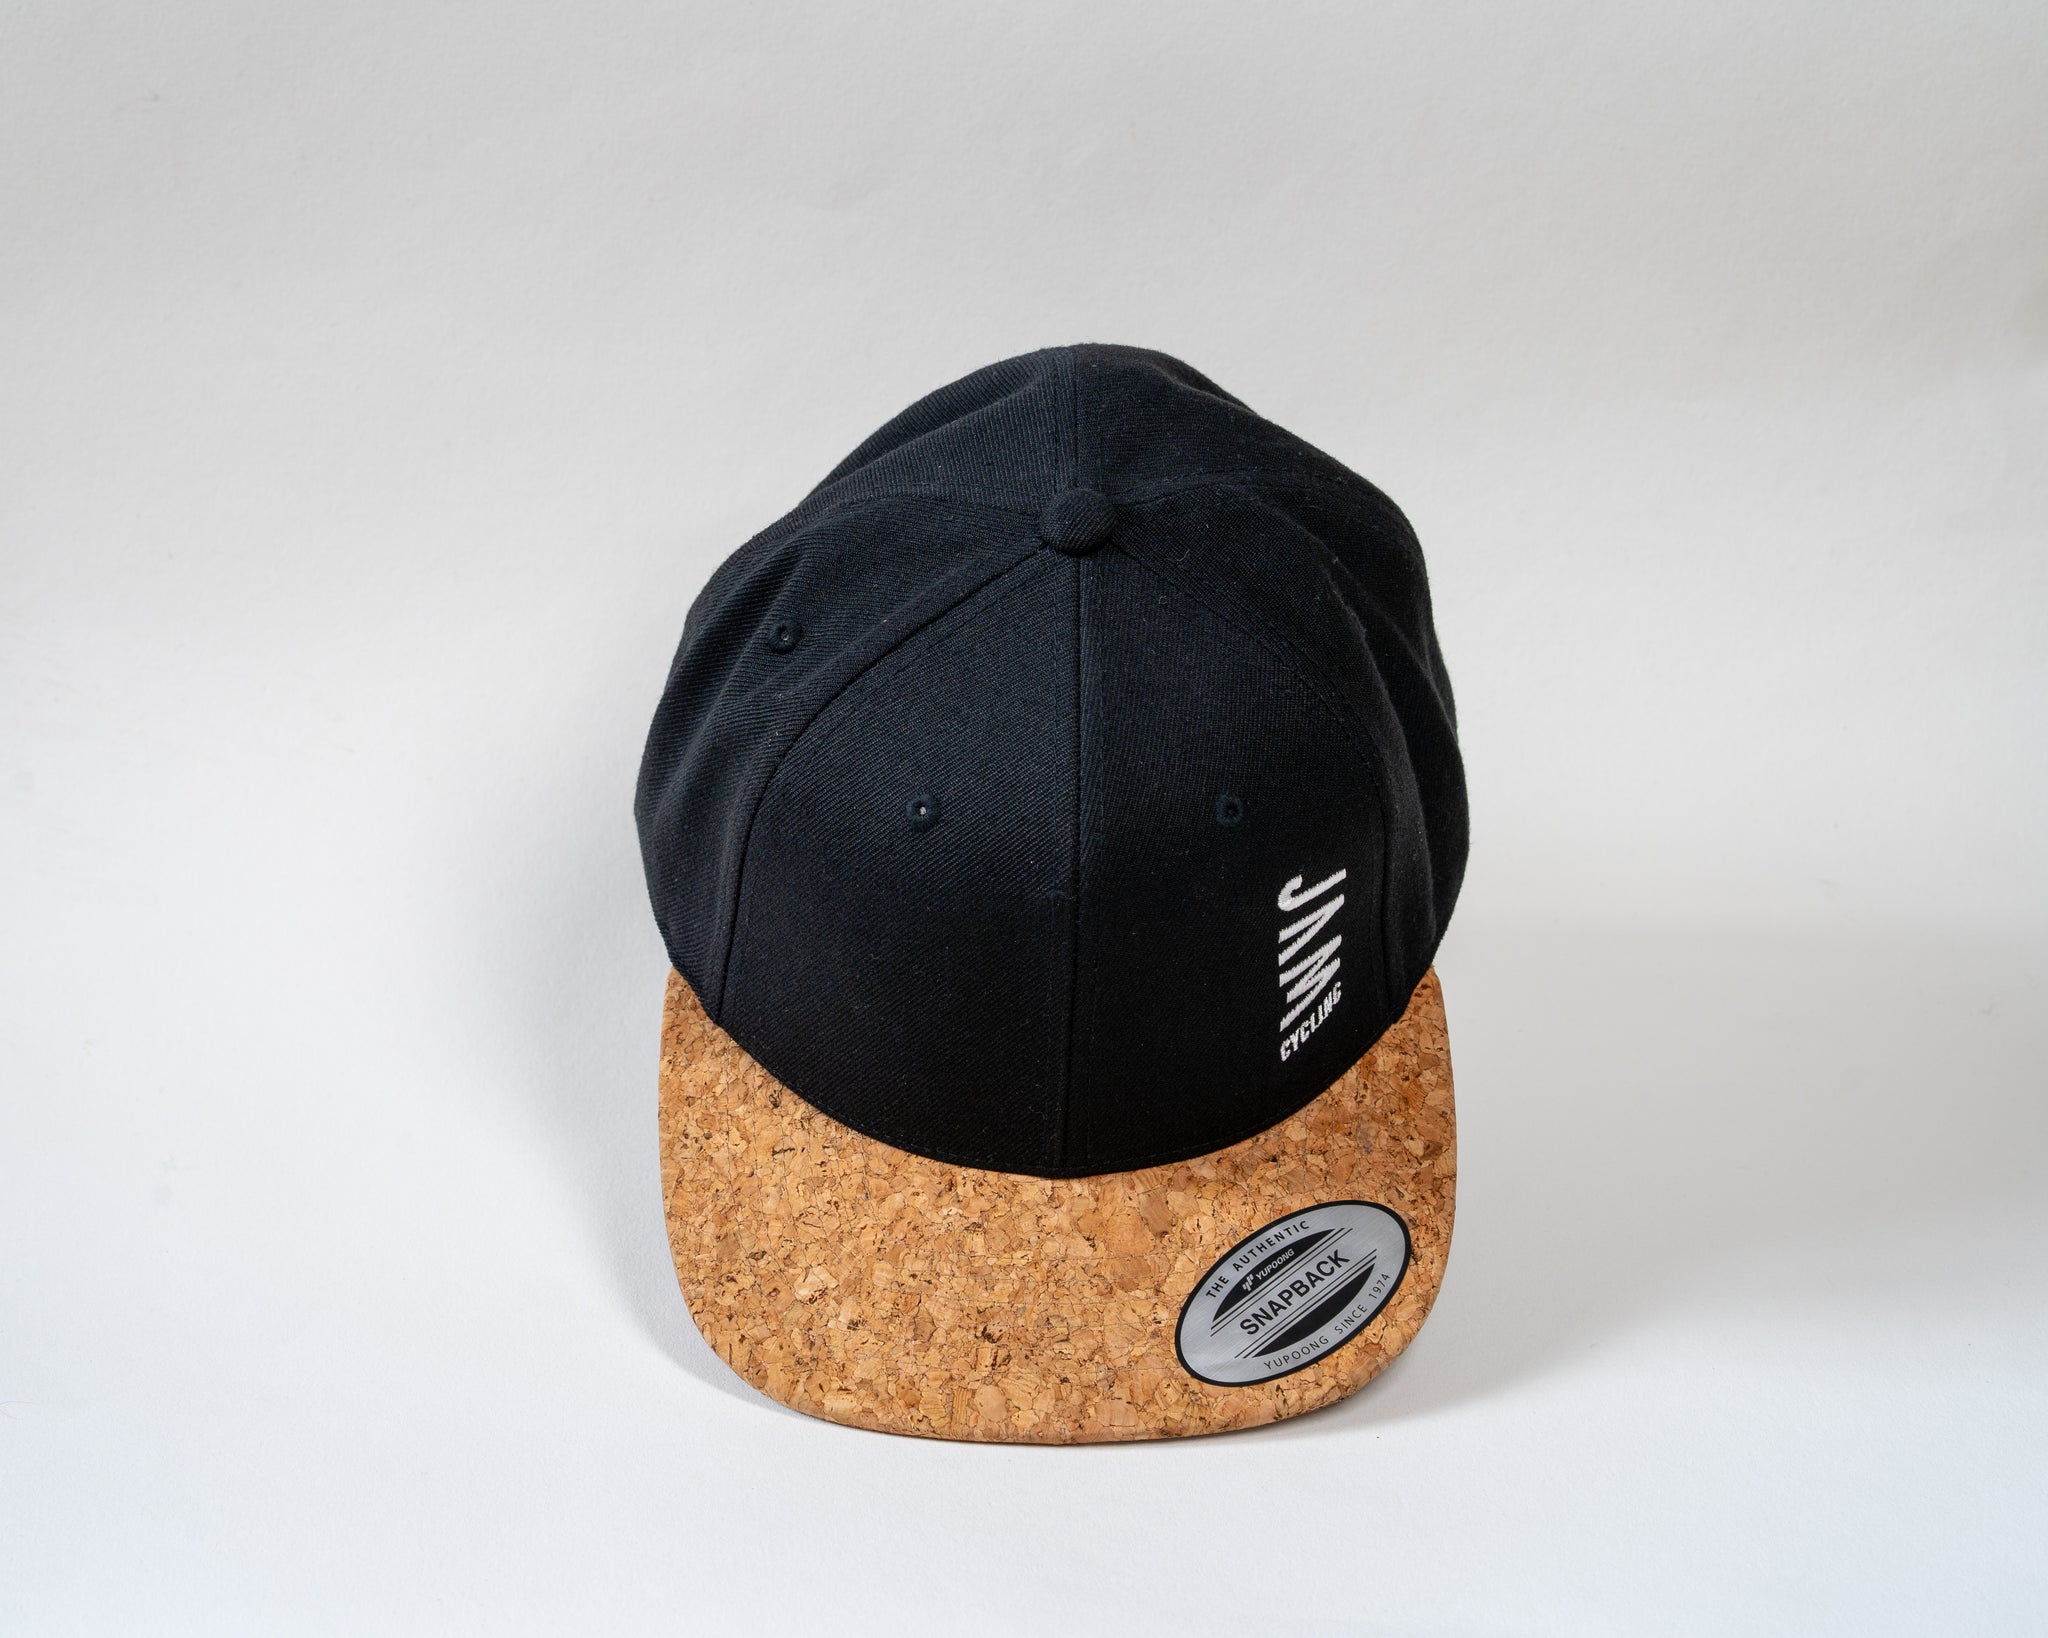 JAM snap back cap featuring cork peak stitched JAM logo floating on a white background